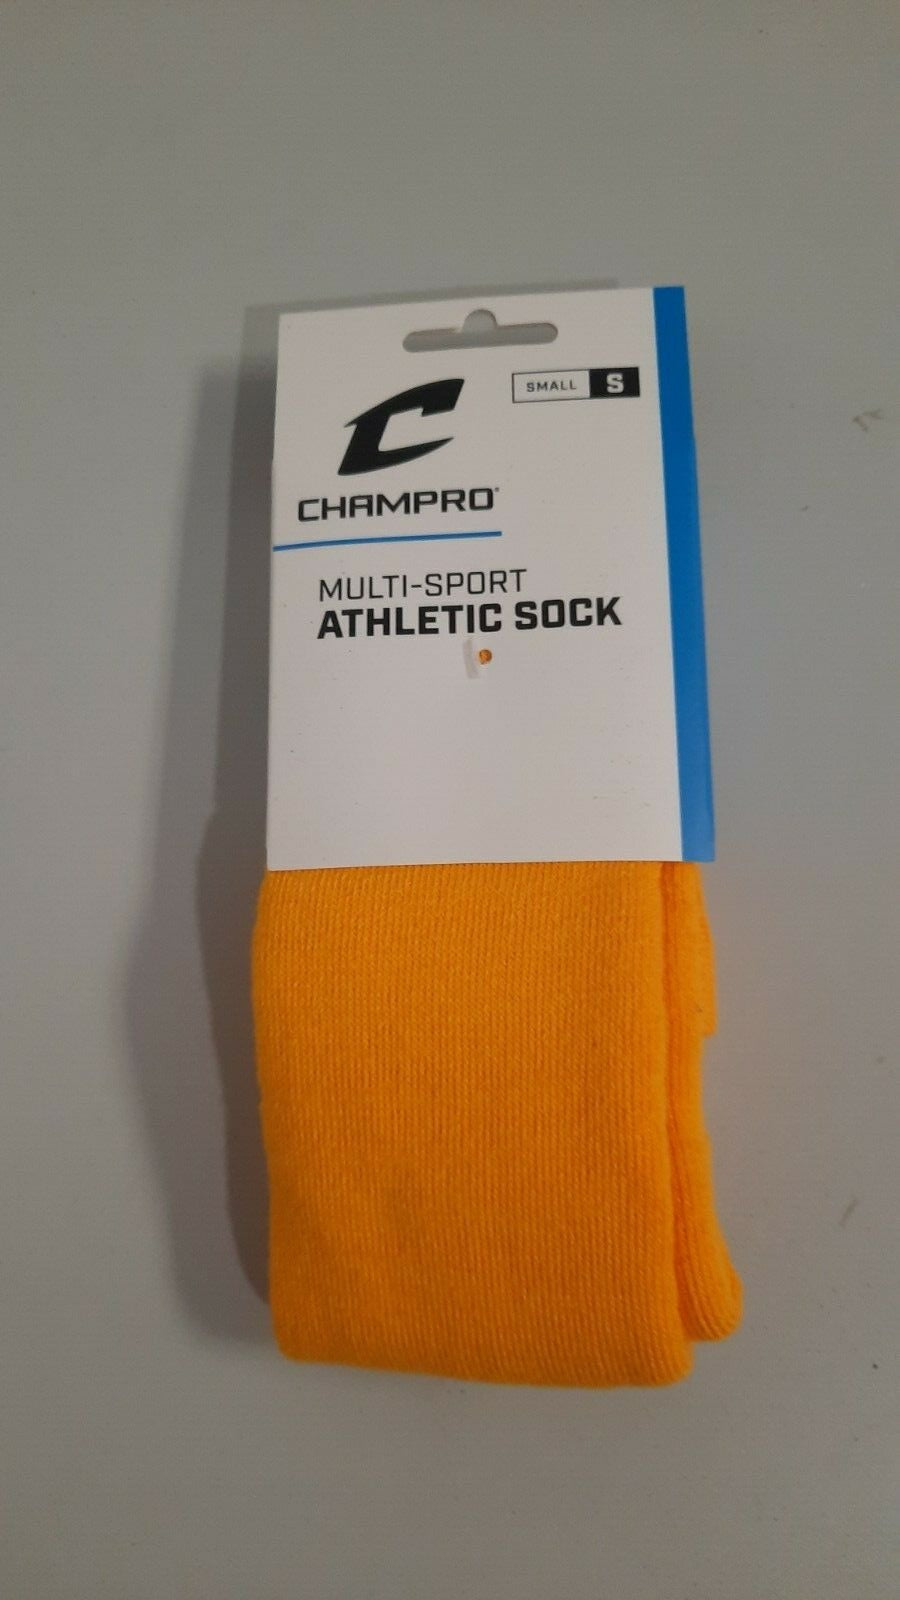 Champro Multi sport athletic sock size small